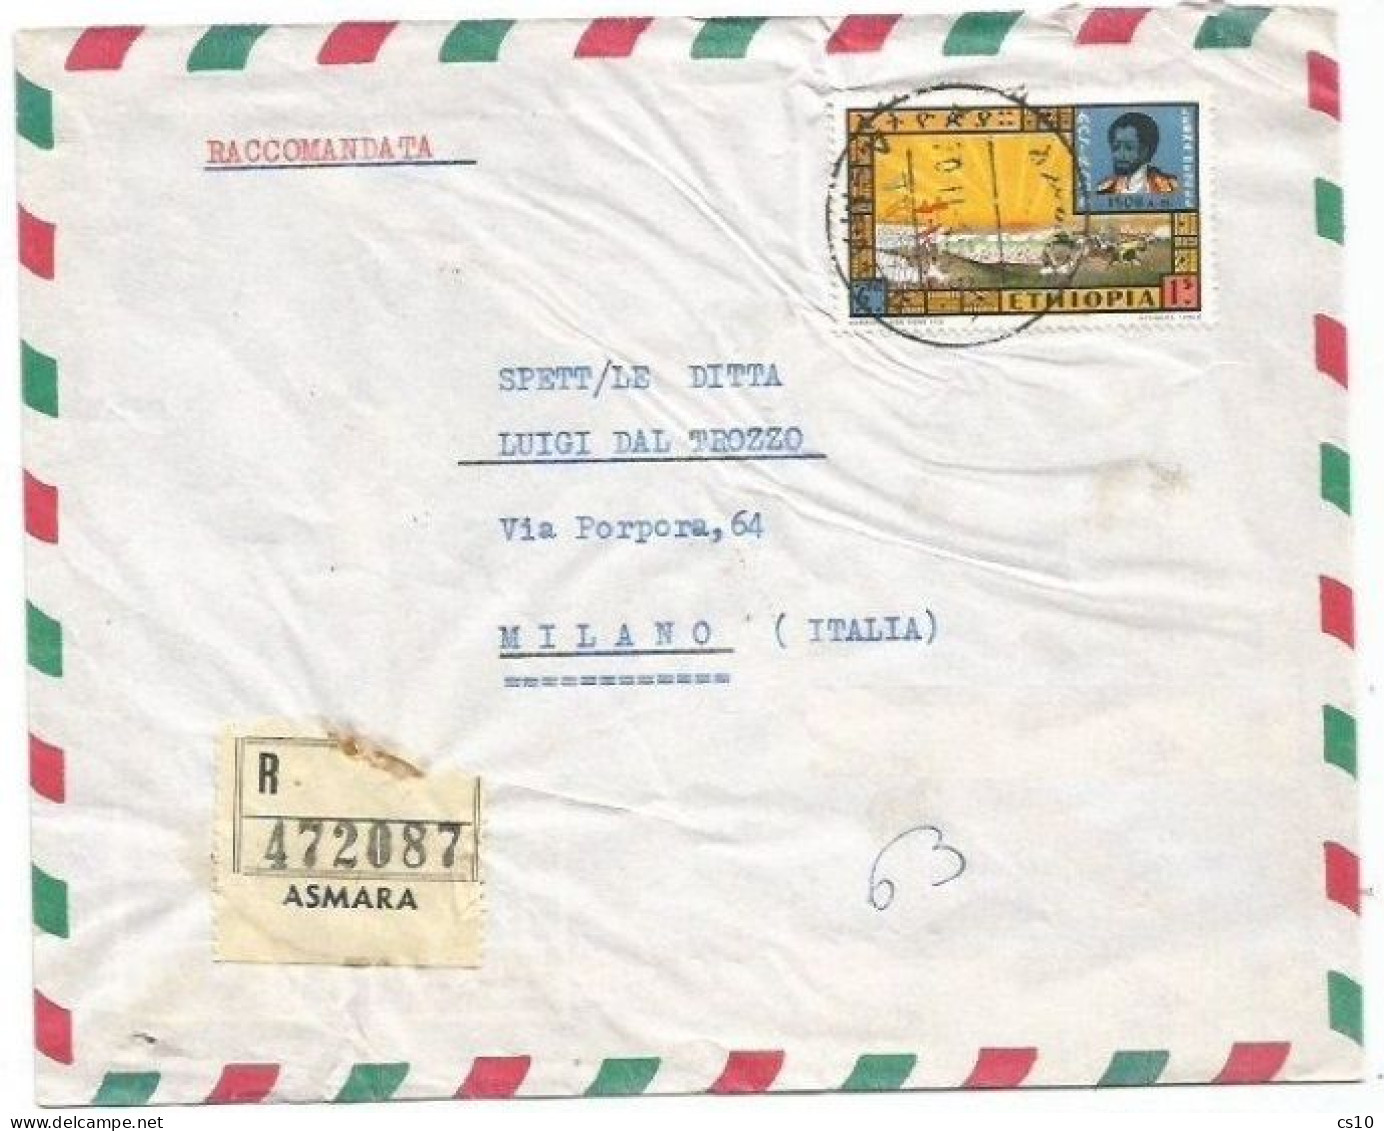 Ethiopia Airmail Registered Commerce Cover Asmara 30nov1966 To Italy With Lebna Dengel  E$ 1 Solo Franking - Ethiopie